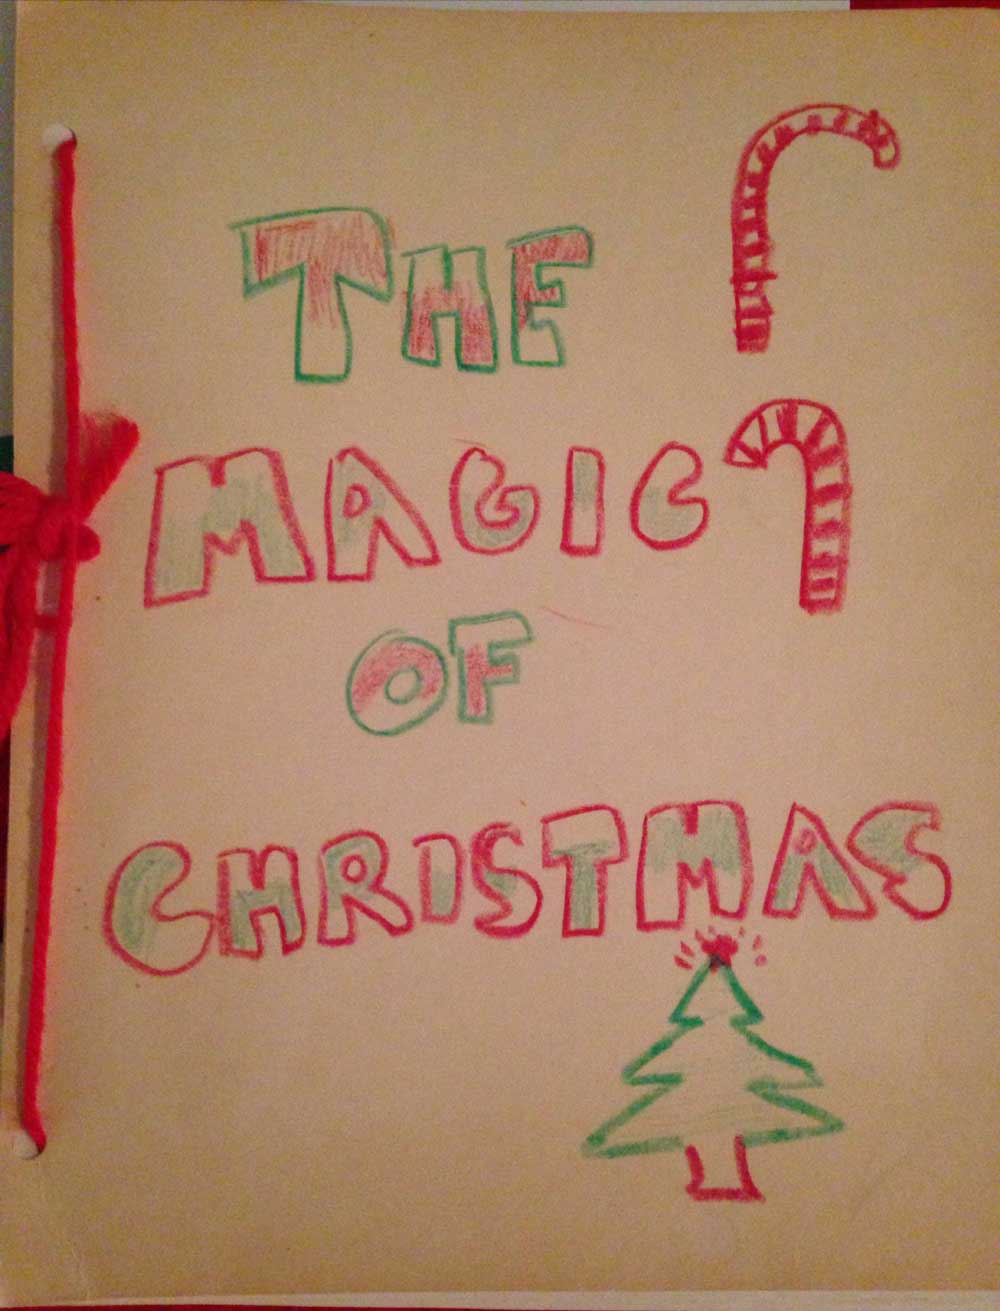 The Magic of Christmas, written by Paul Schwab